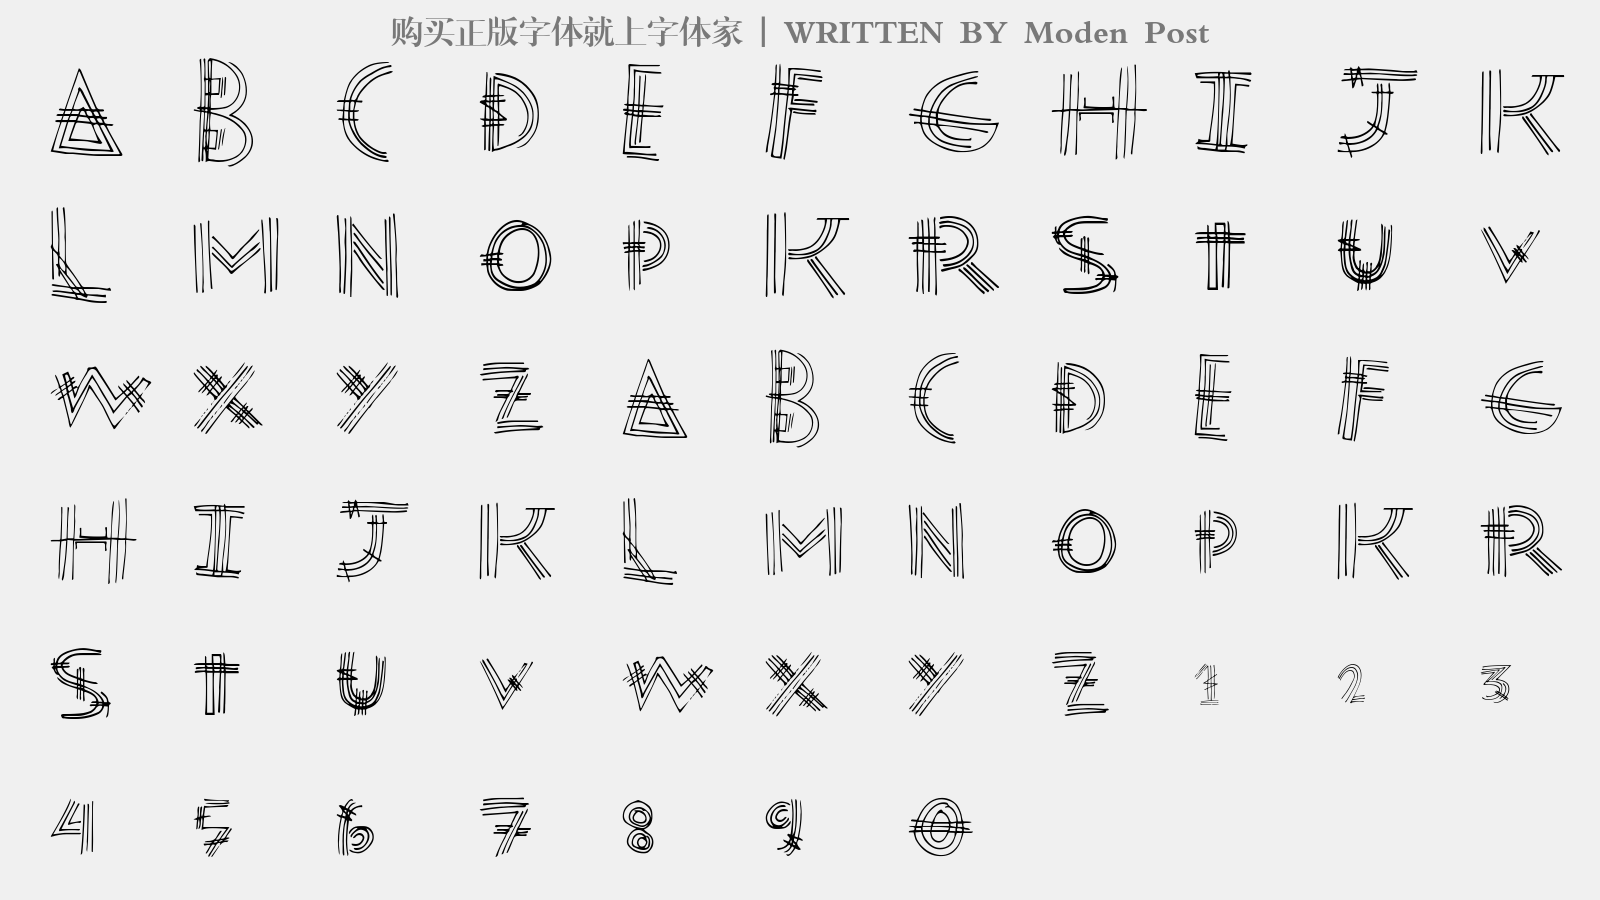 Moden Post - 大写字母/小写字母/数字